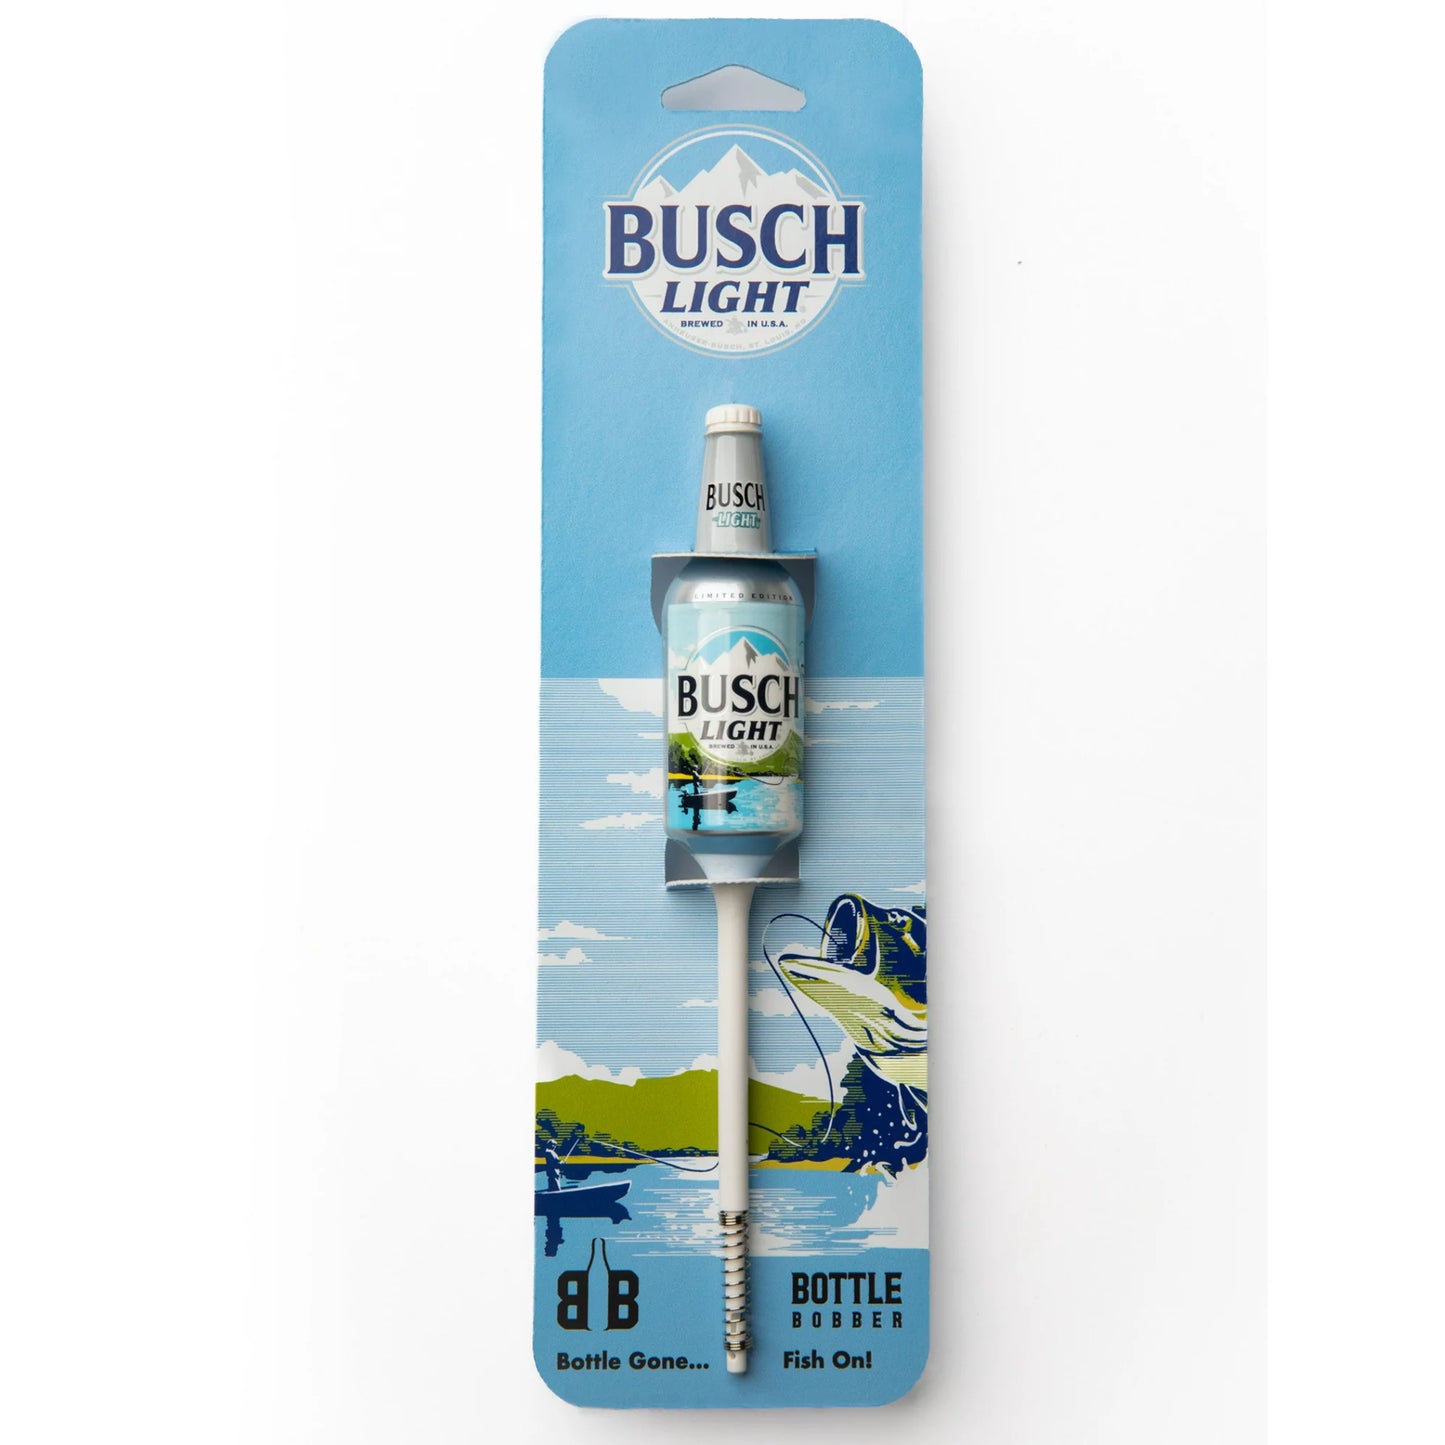 Busch Light Bottle Bobber